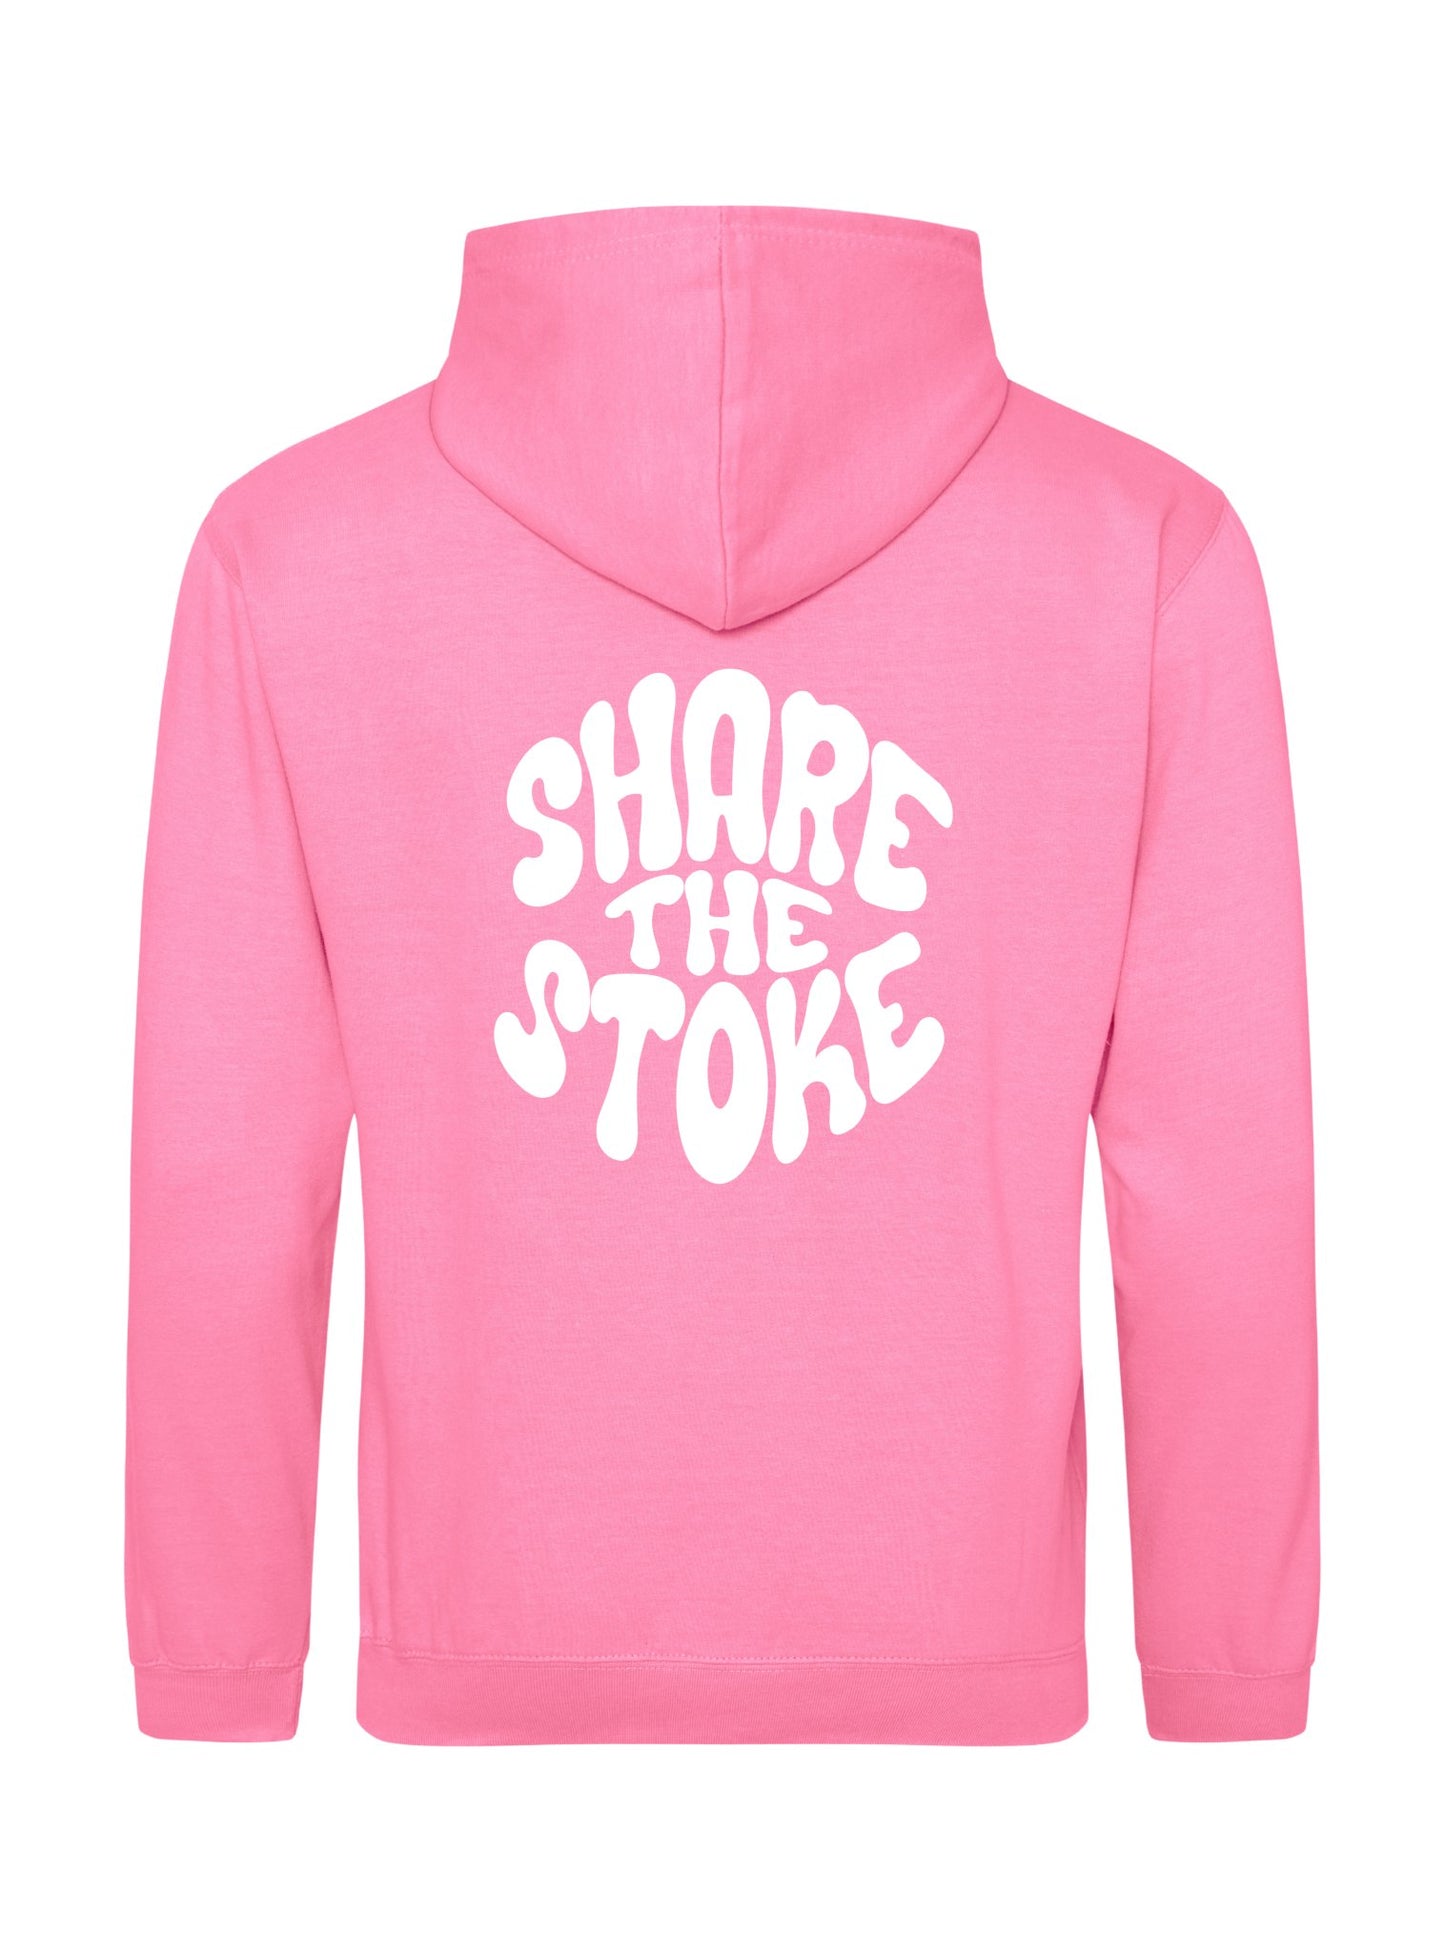 Share Stoke Hoodie | Pink - Shred Like a Girl